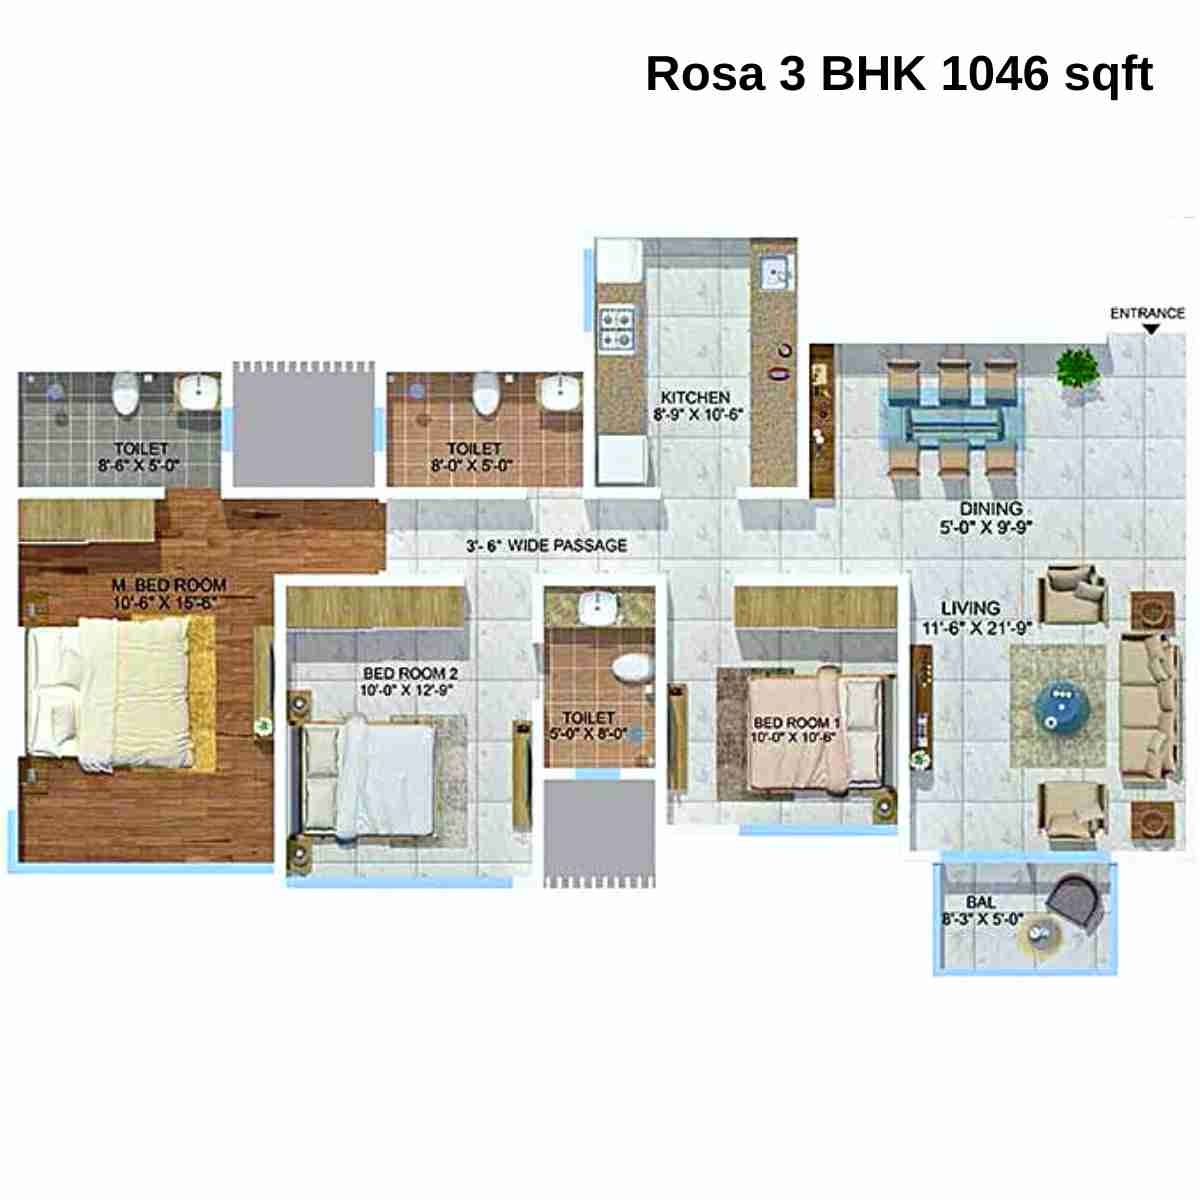 Sheth-Montana-Floor-Plan-Rosa-3-BHK-1046-sqft